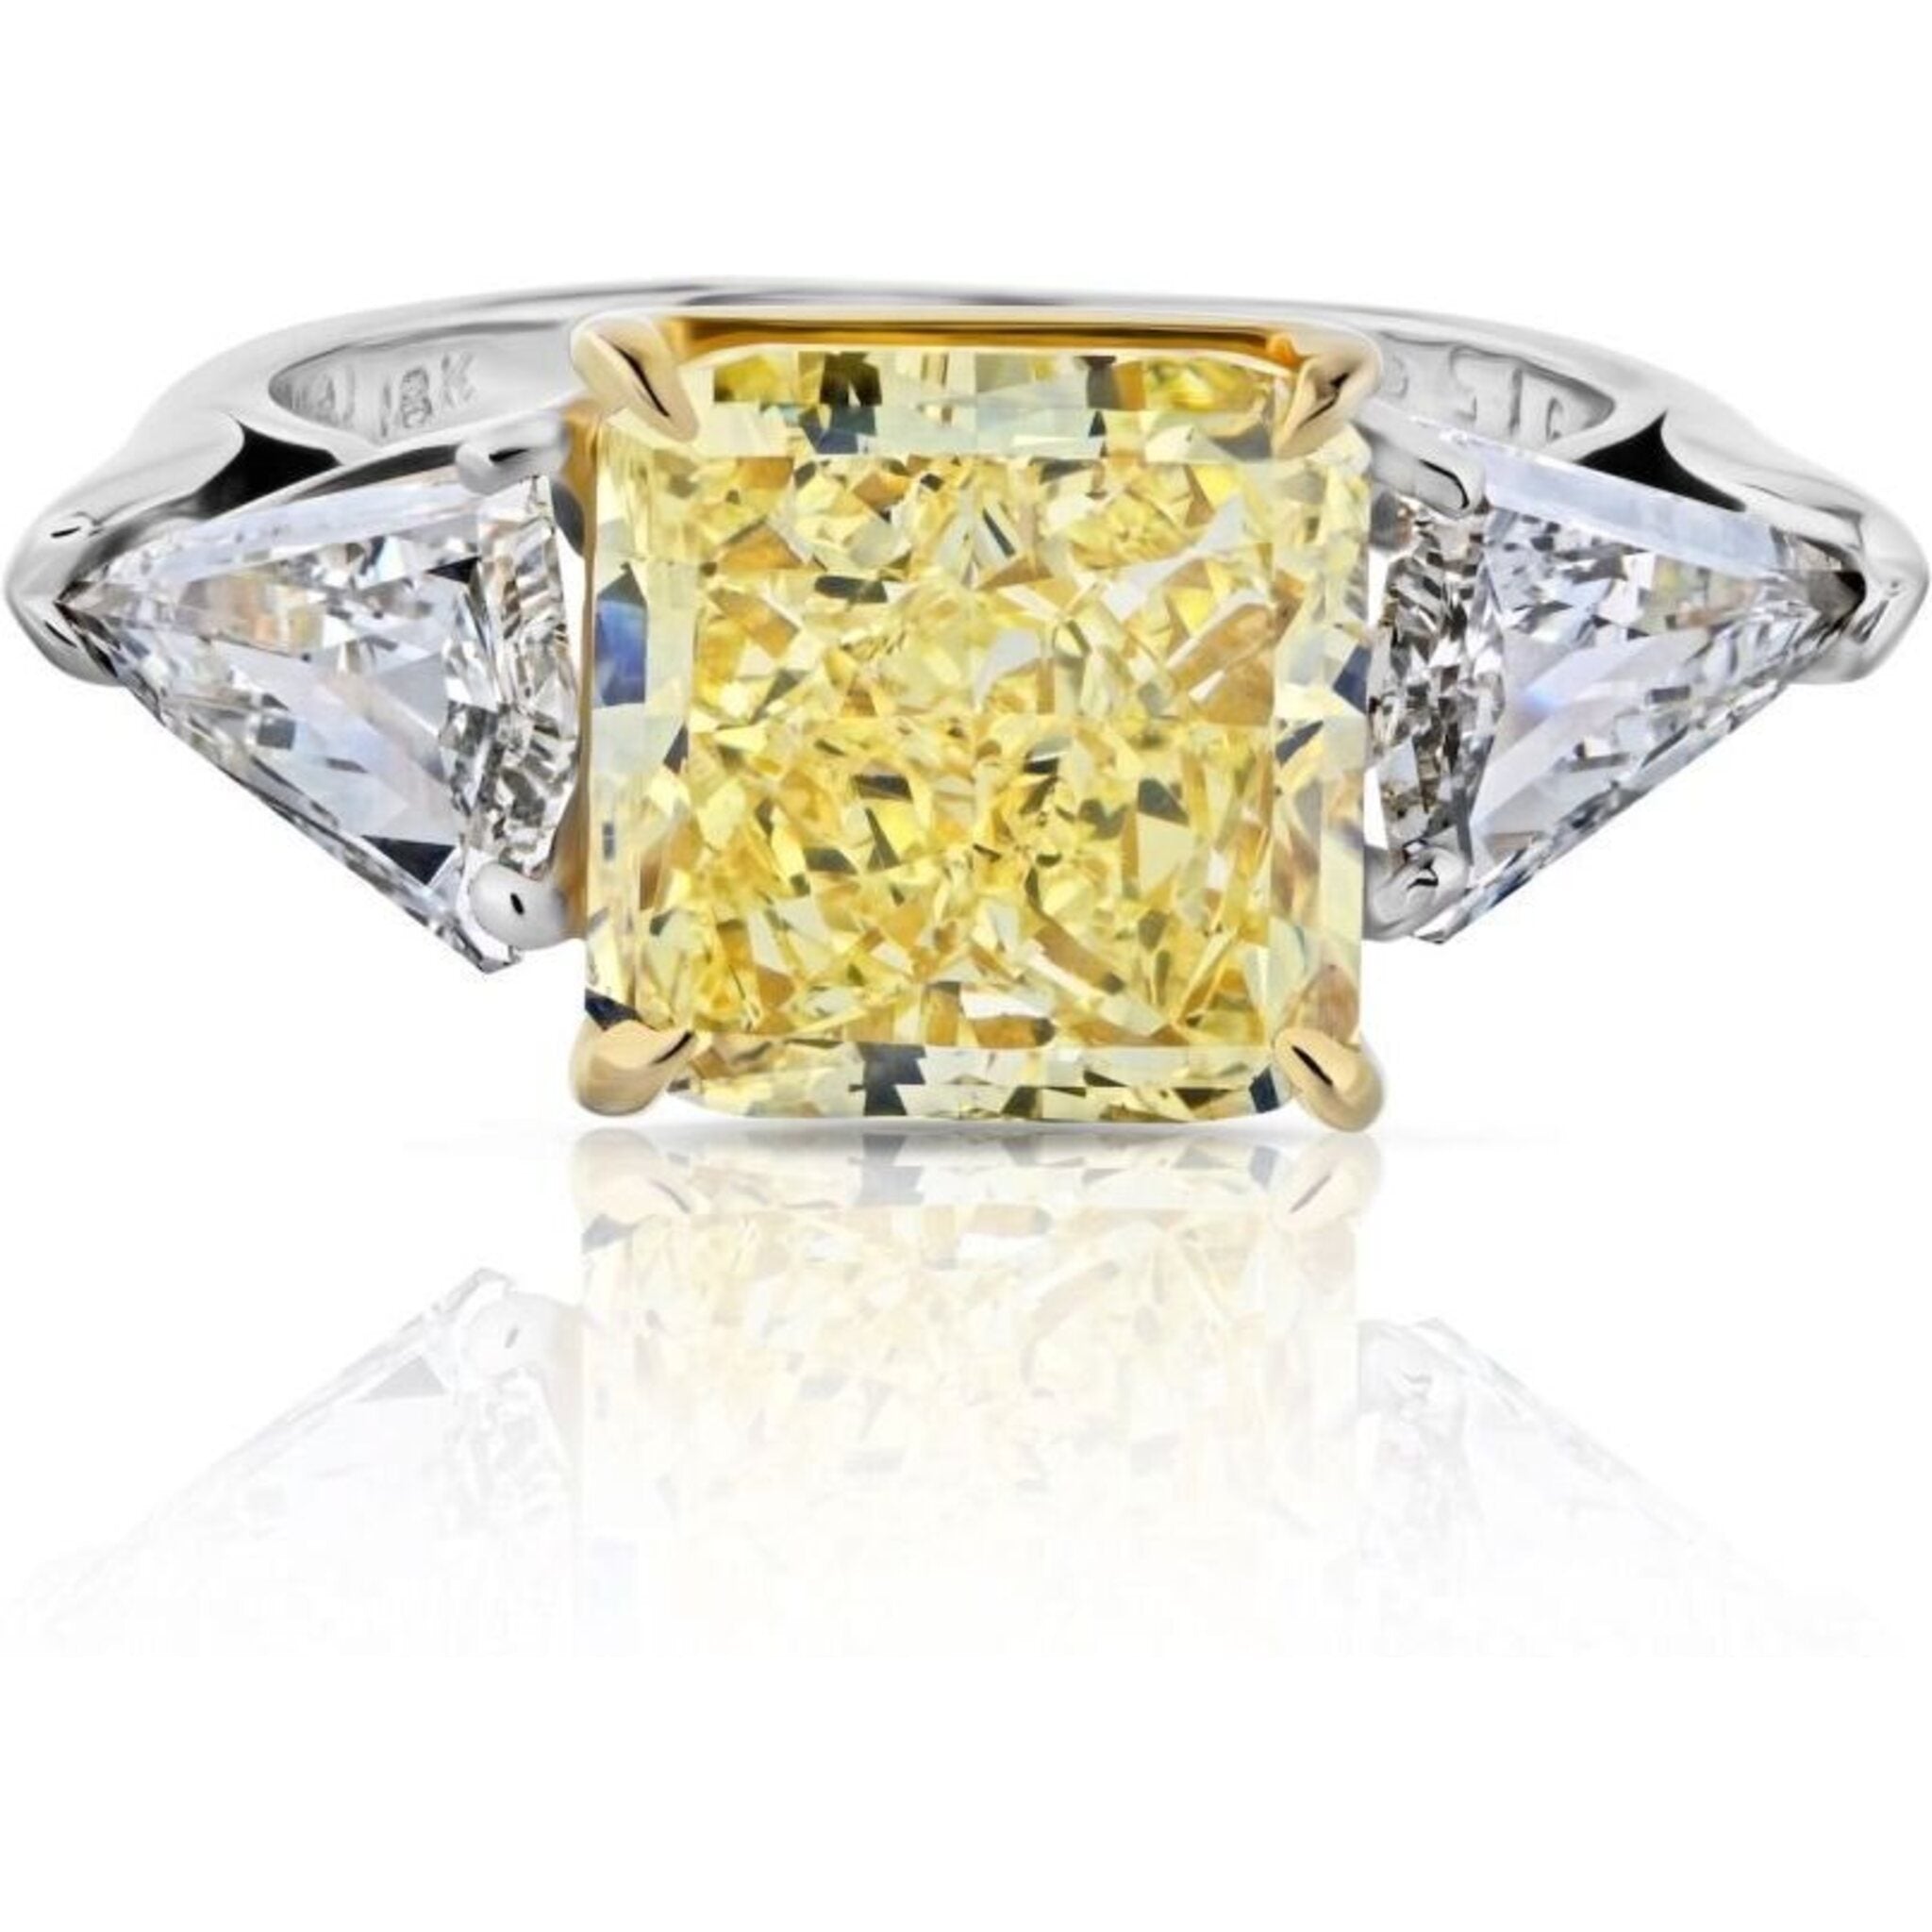 Vivid yellow diamond ring, 1.45 carat